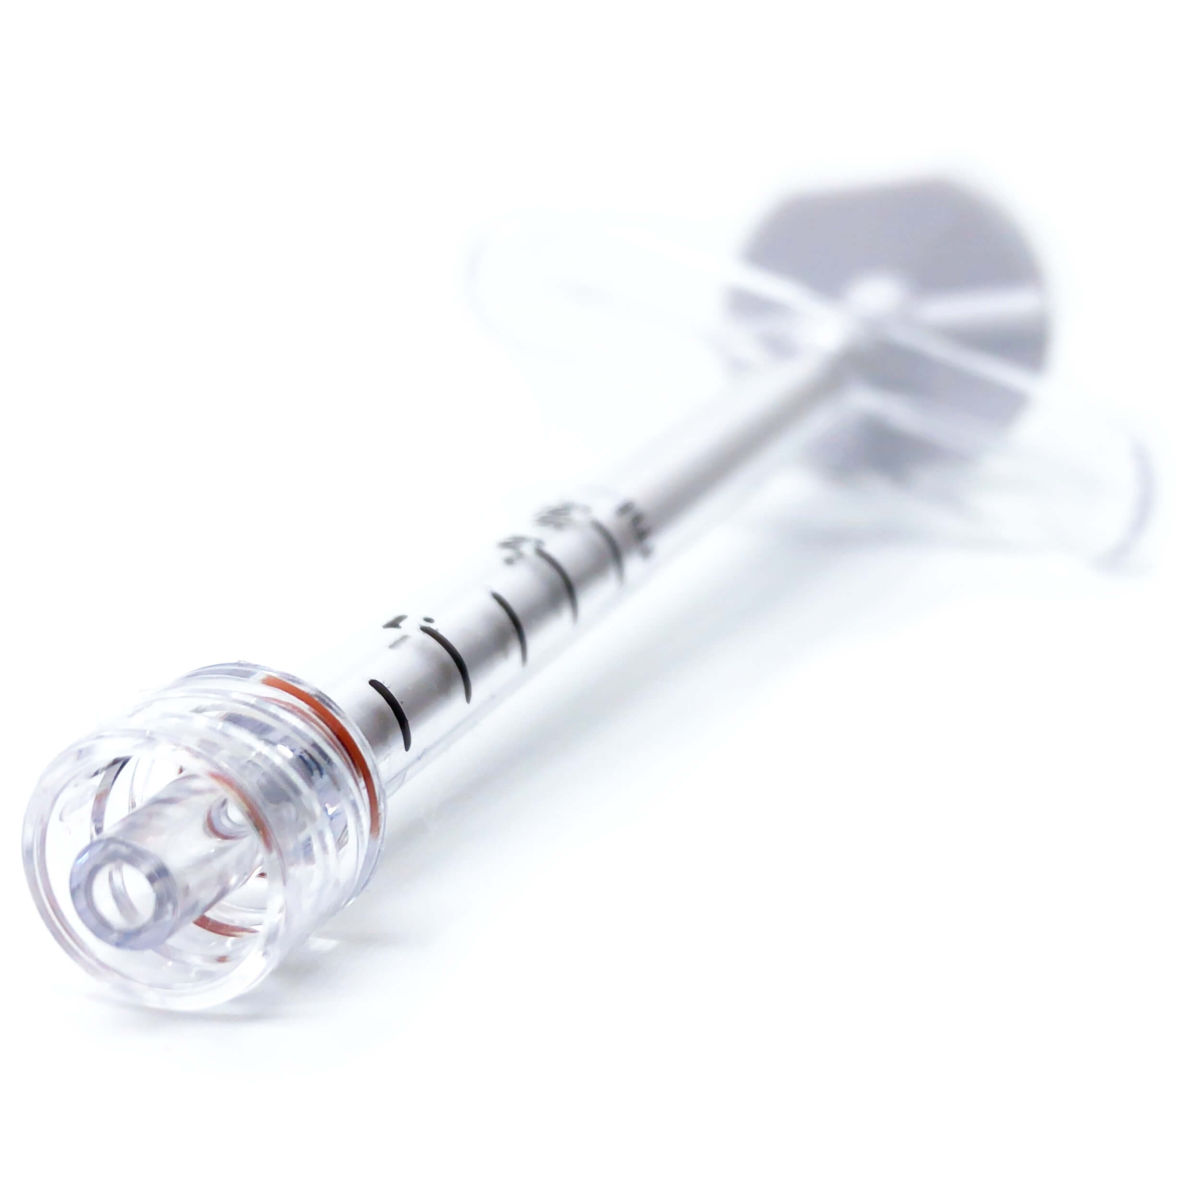 Precision™ Embryo Transfer Syringe (0.25ml)